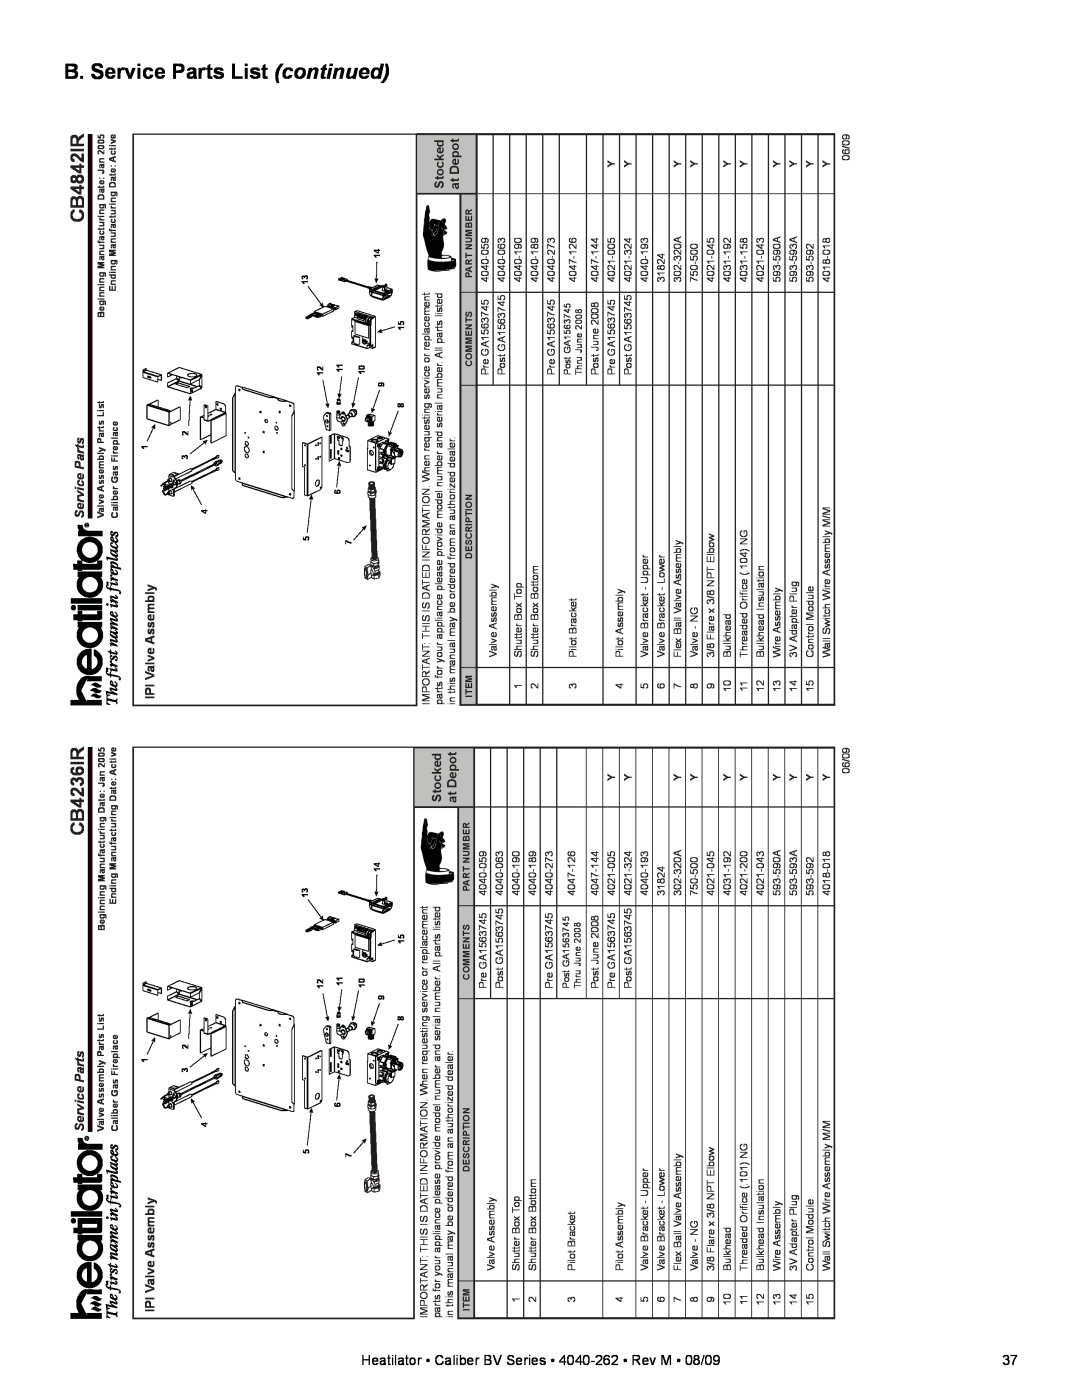 Heatiator CB4842IR owner manual B. Service Parts List continued, CB4236IR, IPI Valve Assembly, Stocked, at Depot 